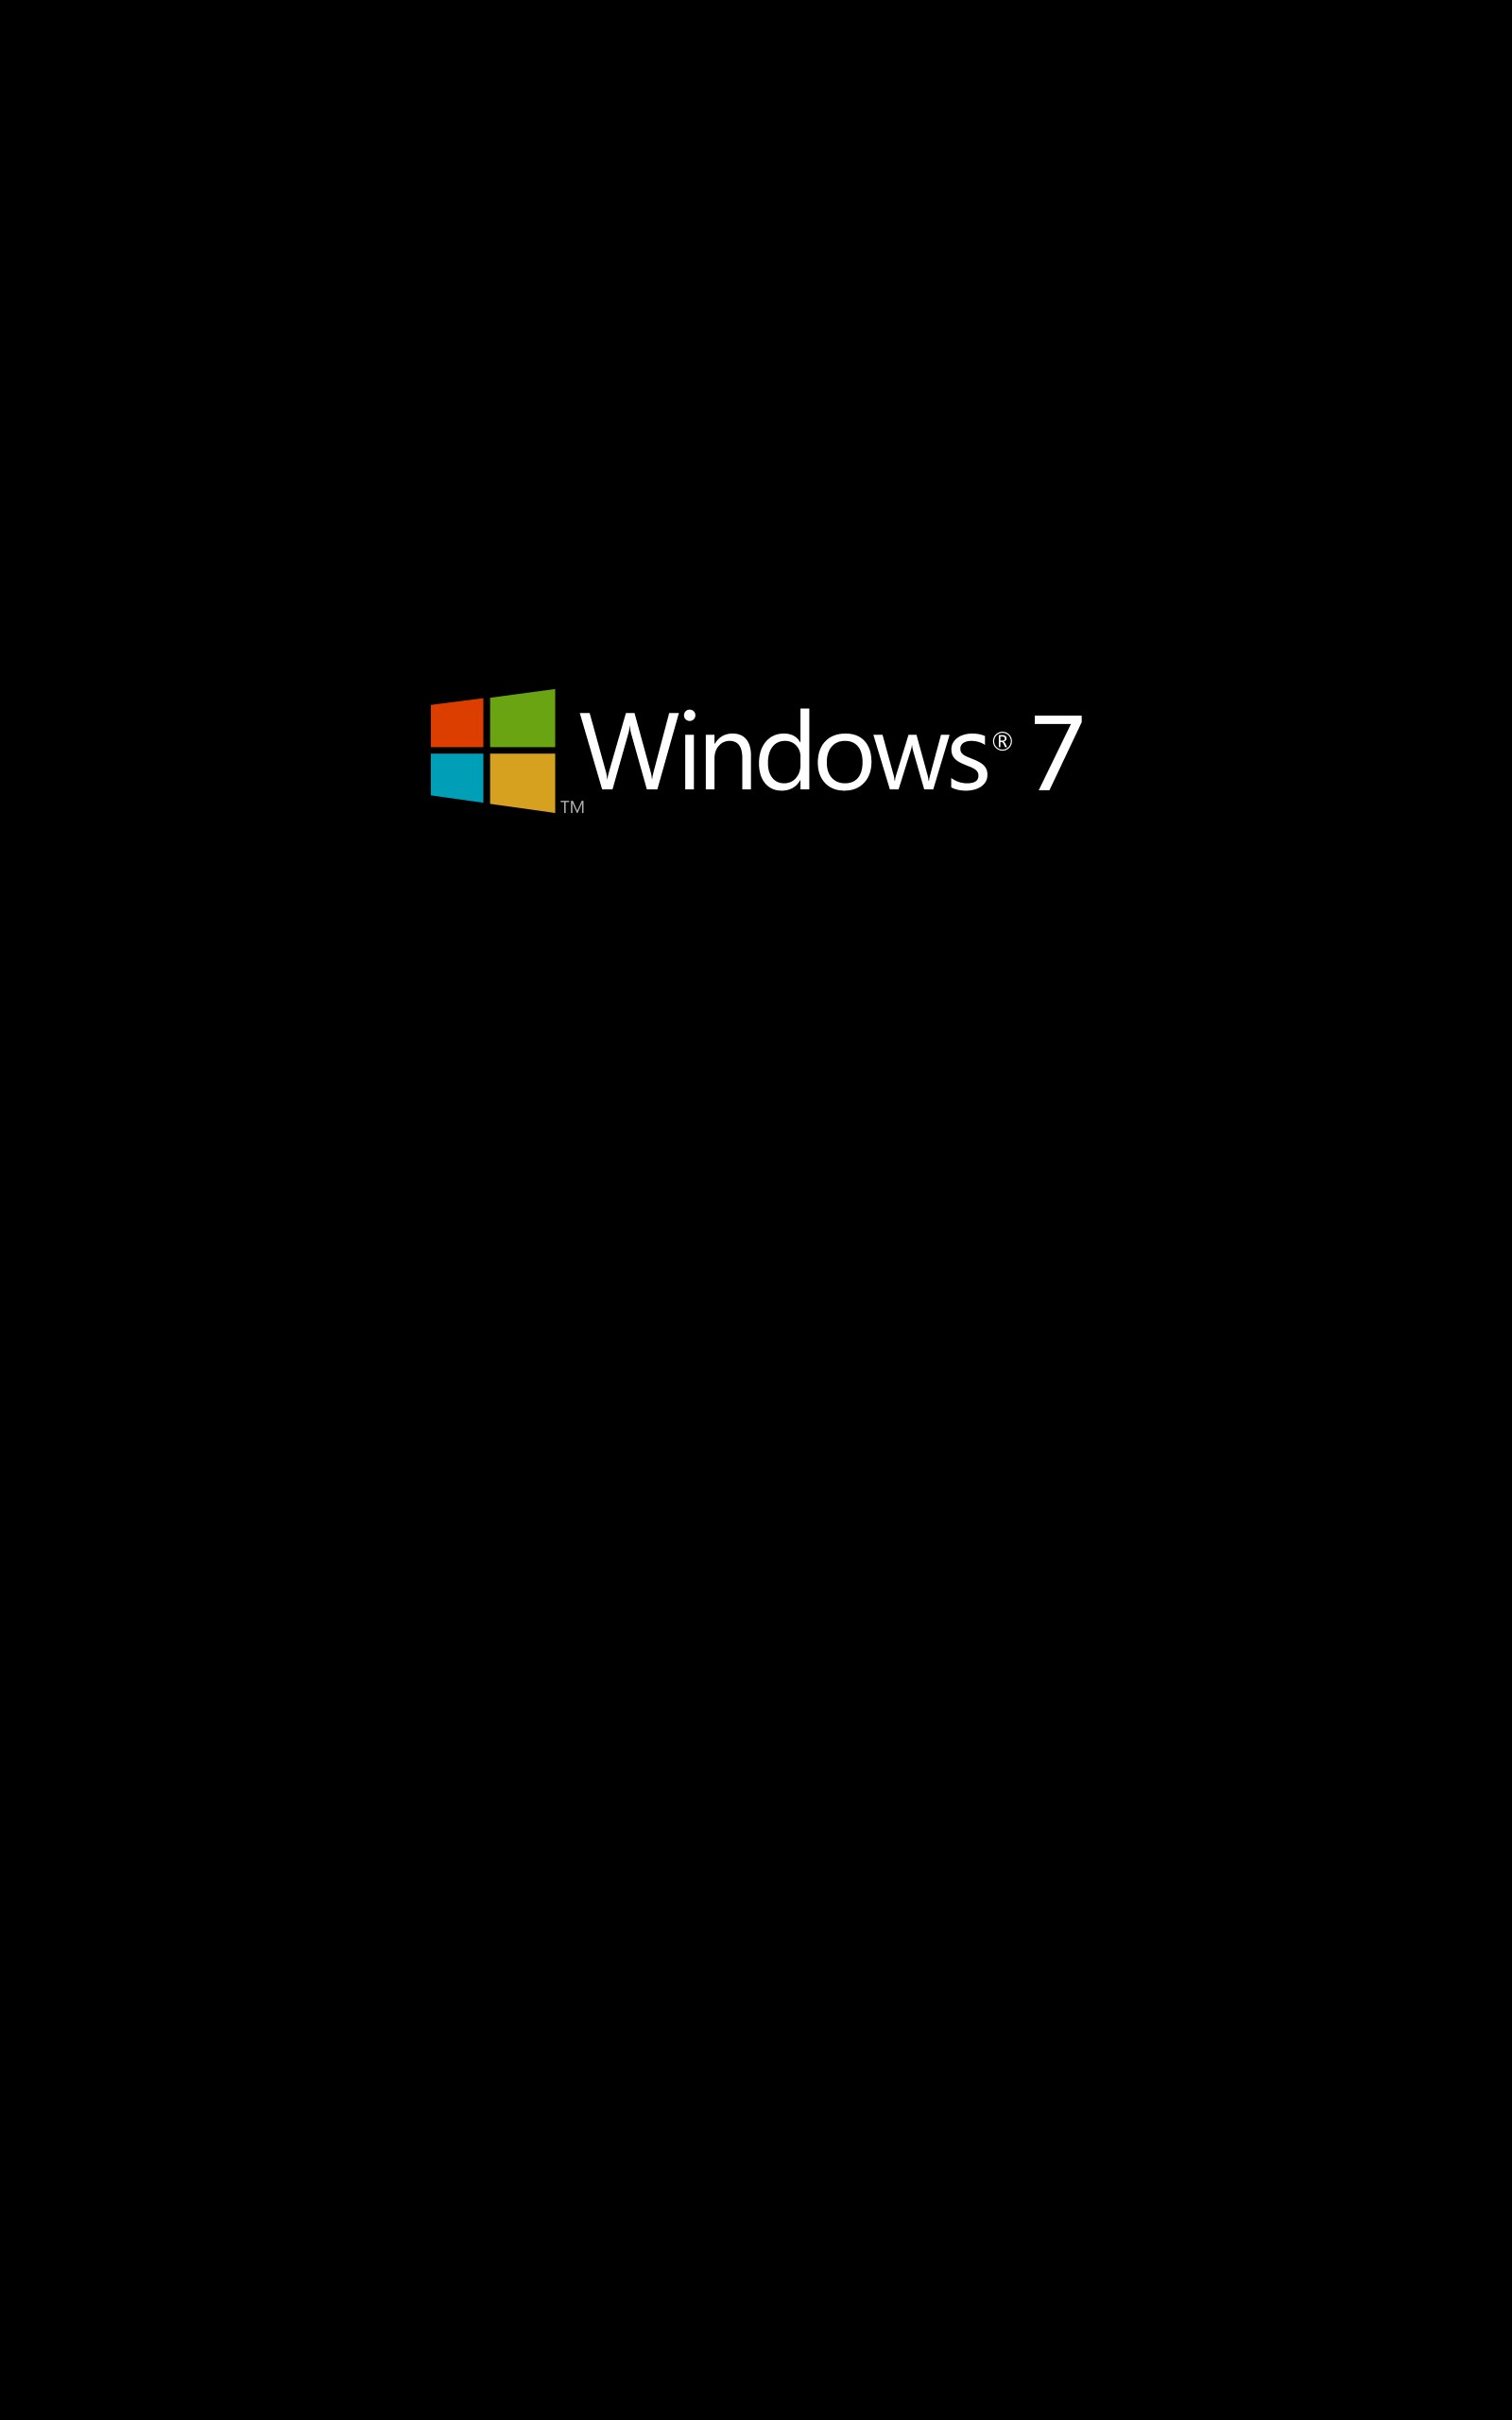 Windows 7, Microsoft Windows, Operating systems, Minimalism, Simple background, Logo, Portrait display Wallpaper